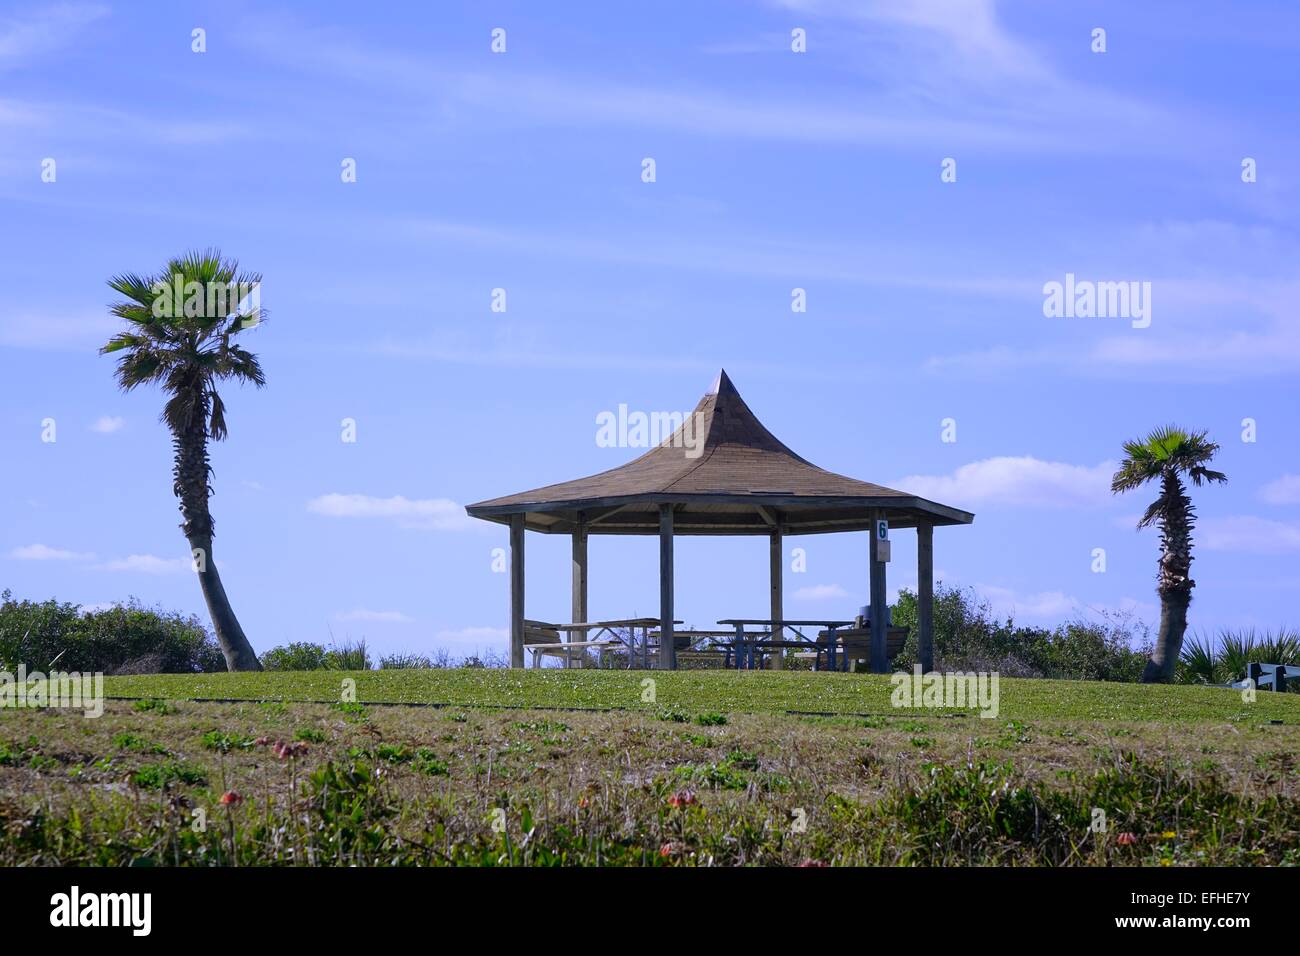 Gazebo, Bicentennial Park, Ormond Beach, Florida Stock Photo